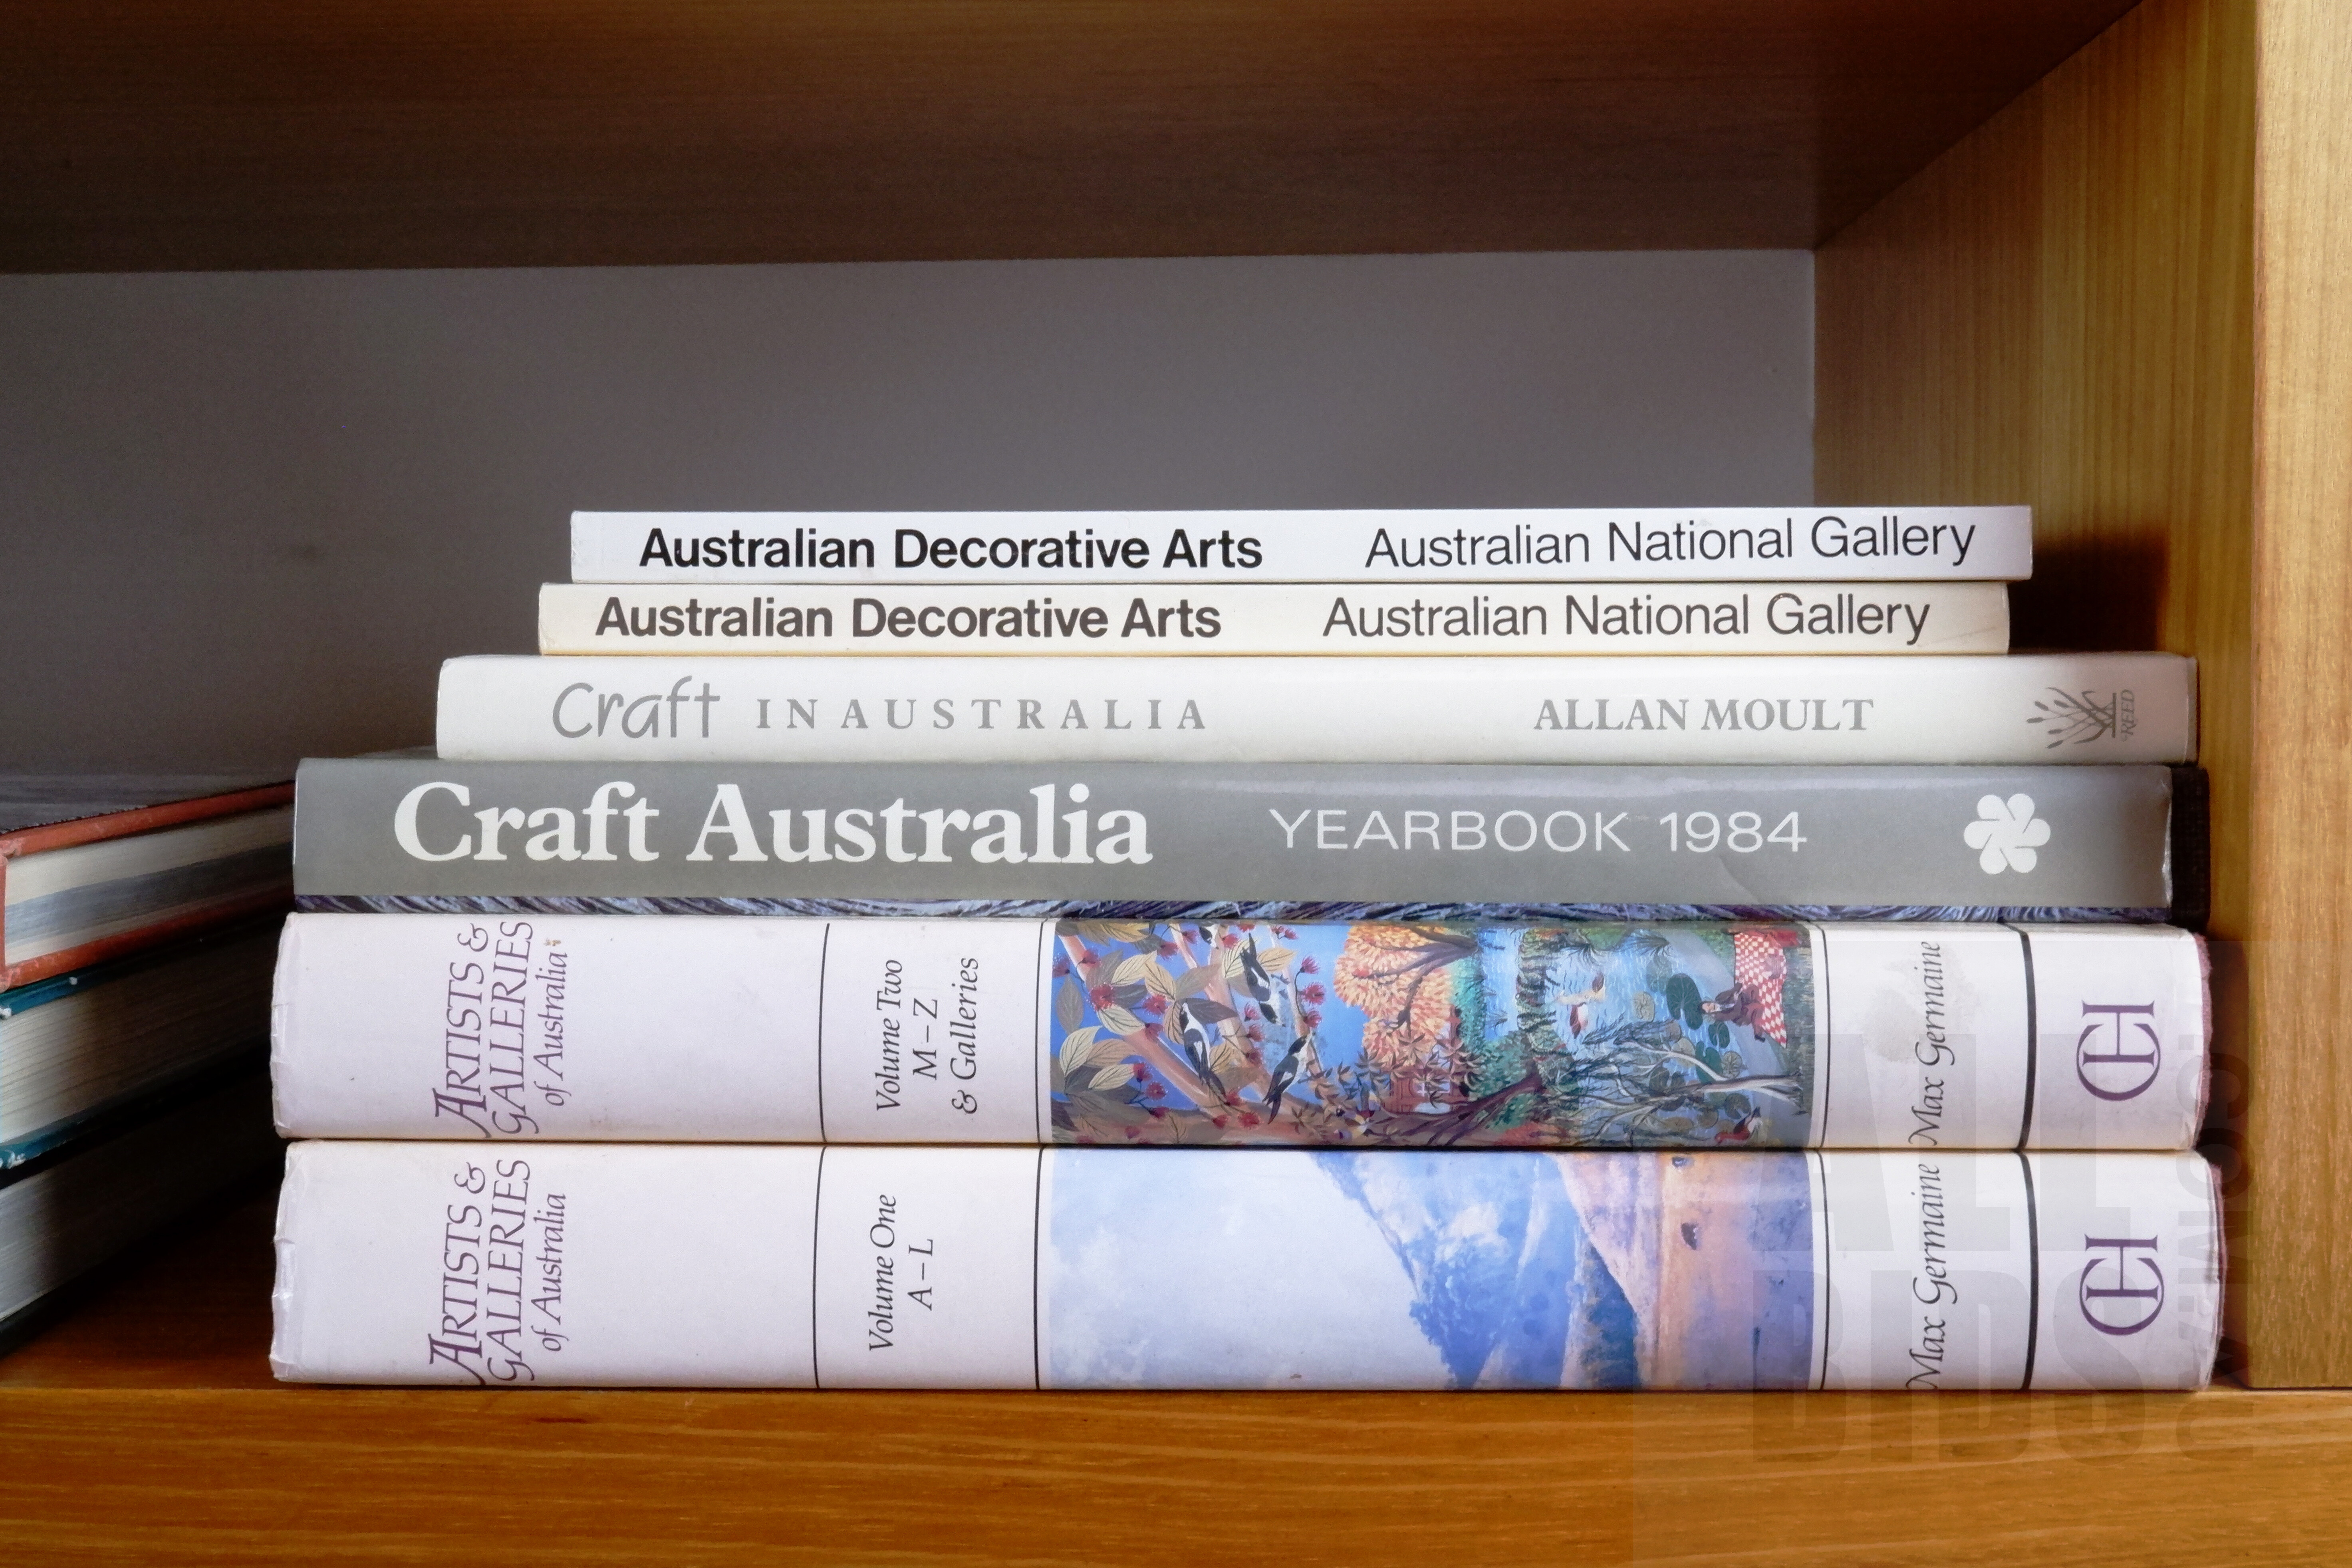 'Various Australian Art Reference Books, Including Craft Australia and Australian Decorative Arts'